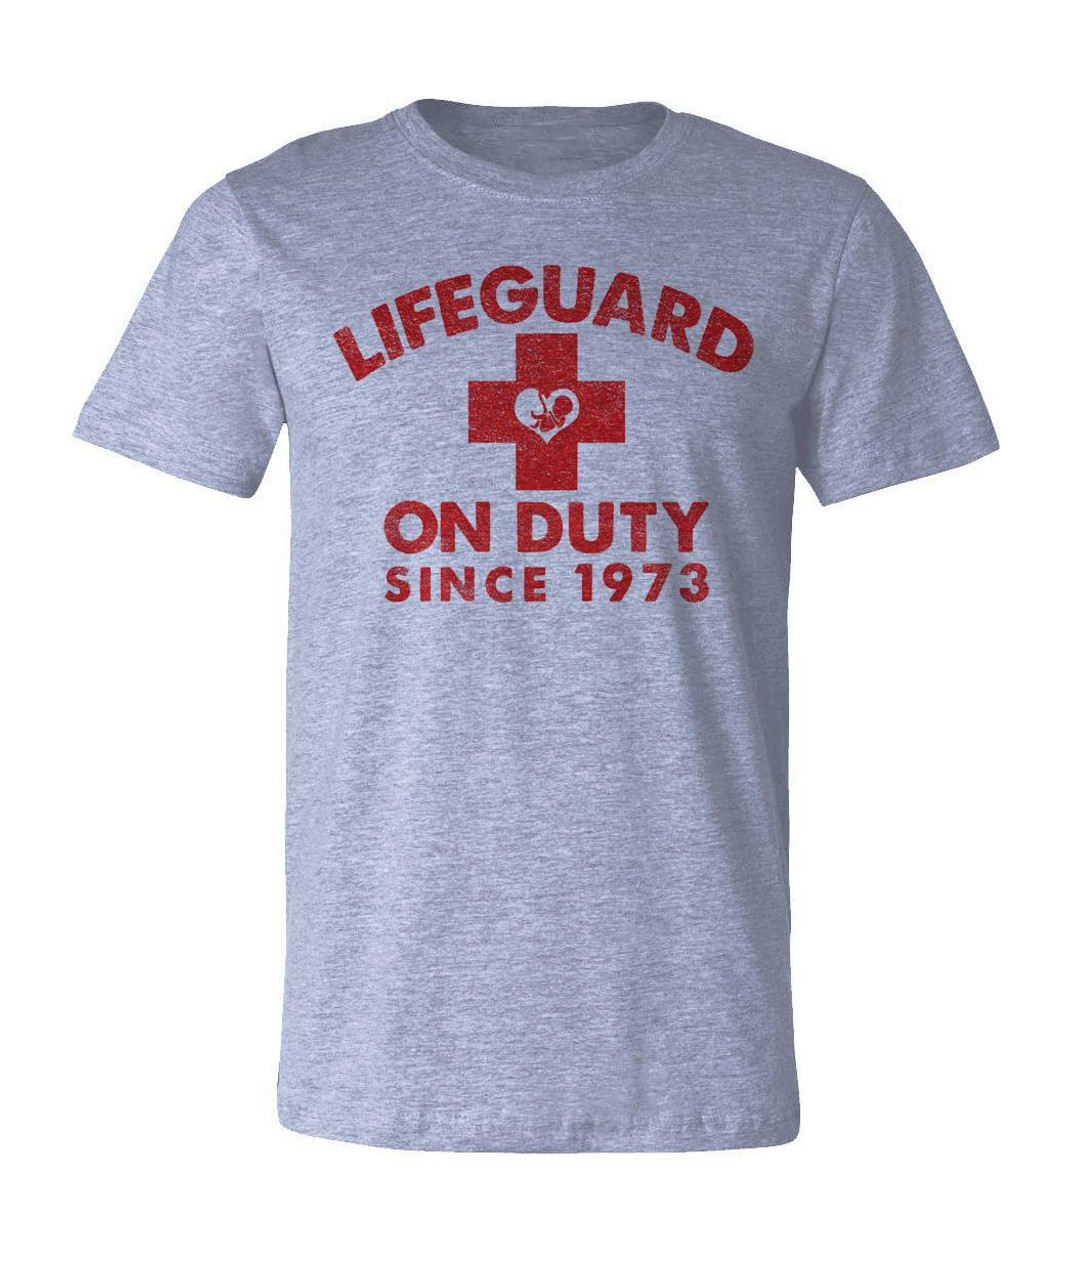 Lifeguard on Duty Since 1973 T-shirt